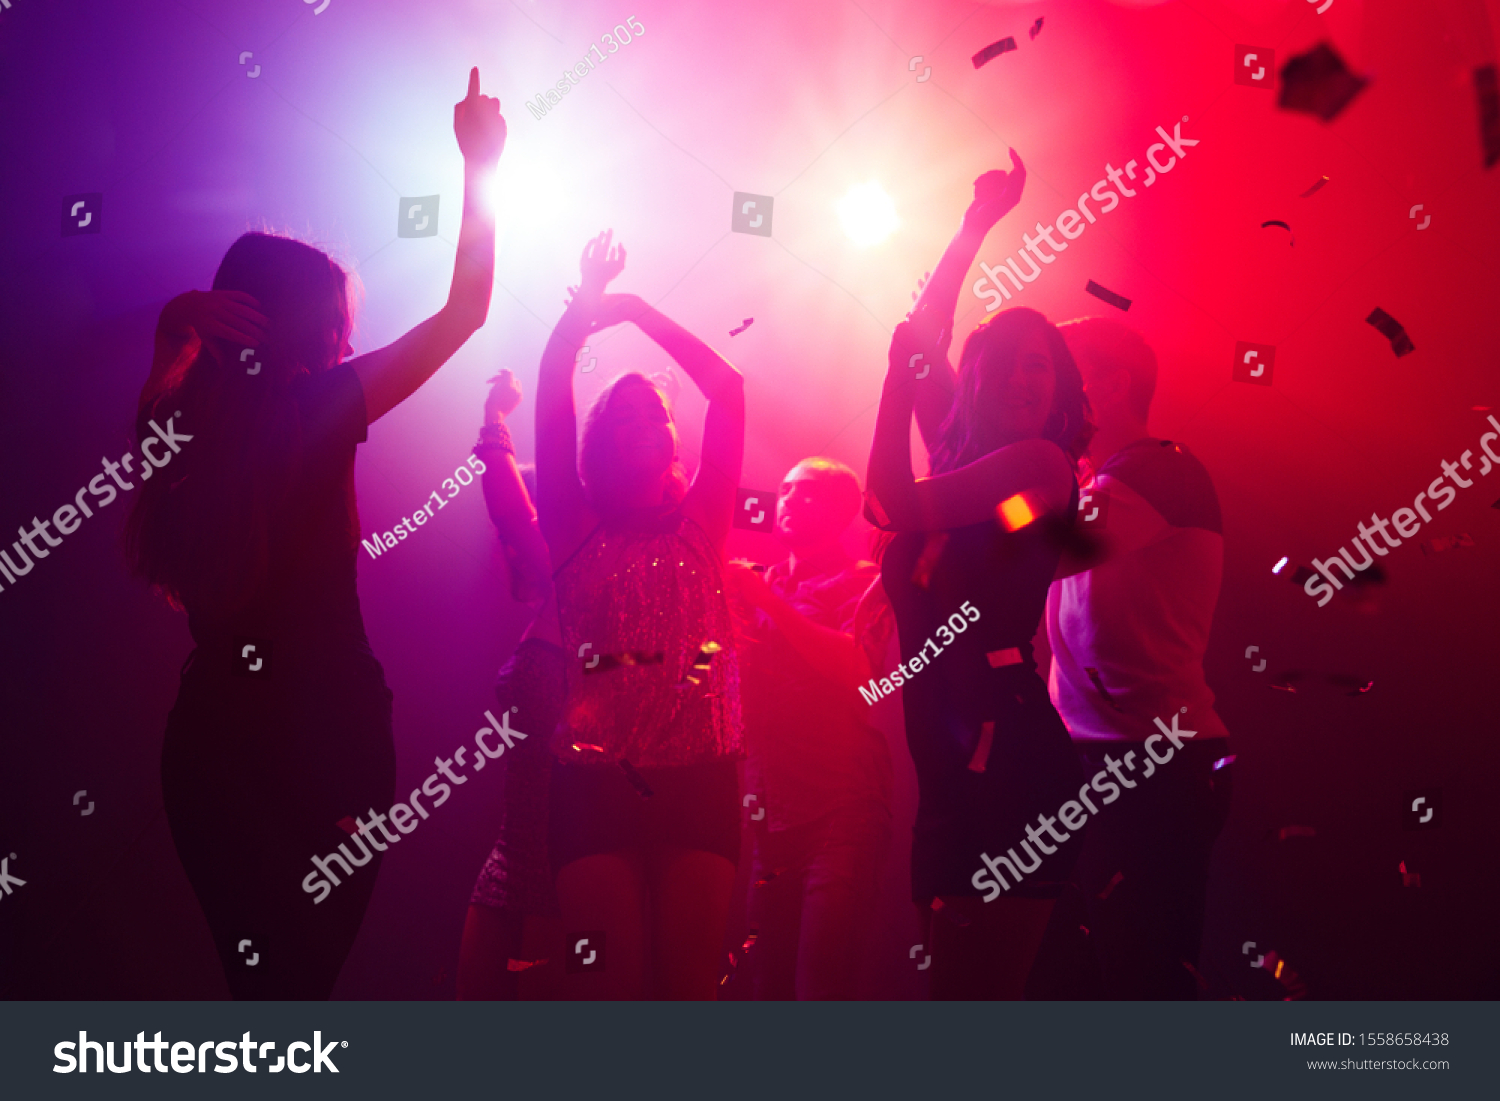 Rhythm Crowd People Silhouette Raises Their Stock Photo 1558658438 ...